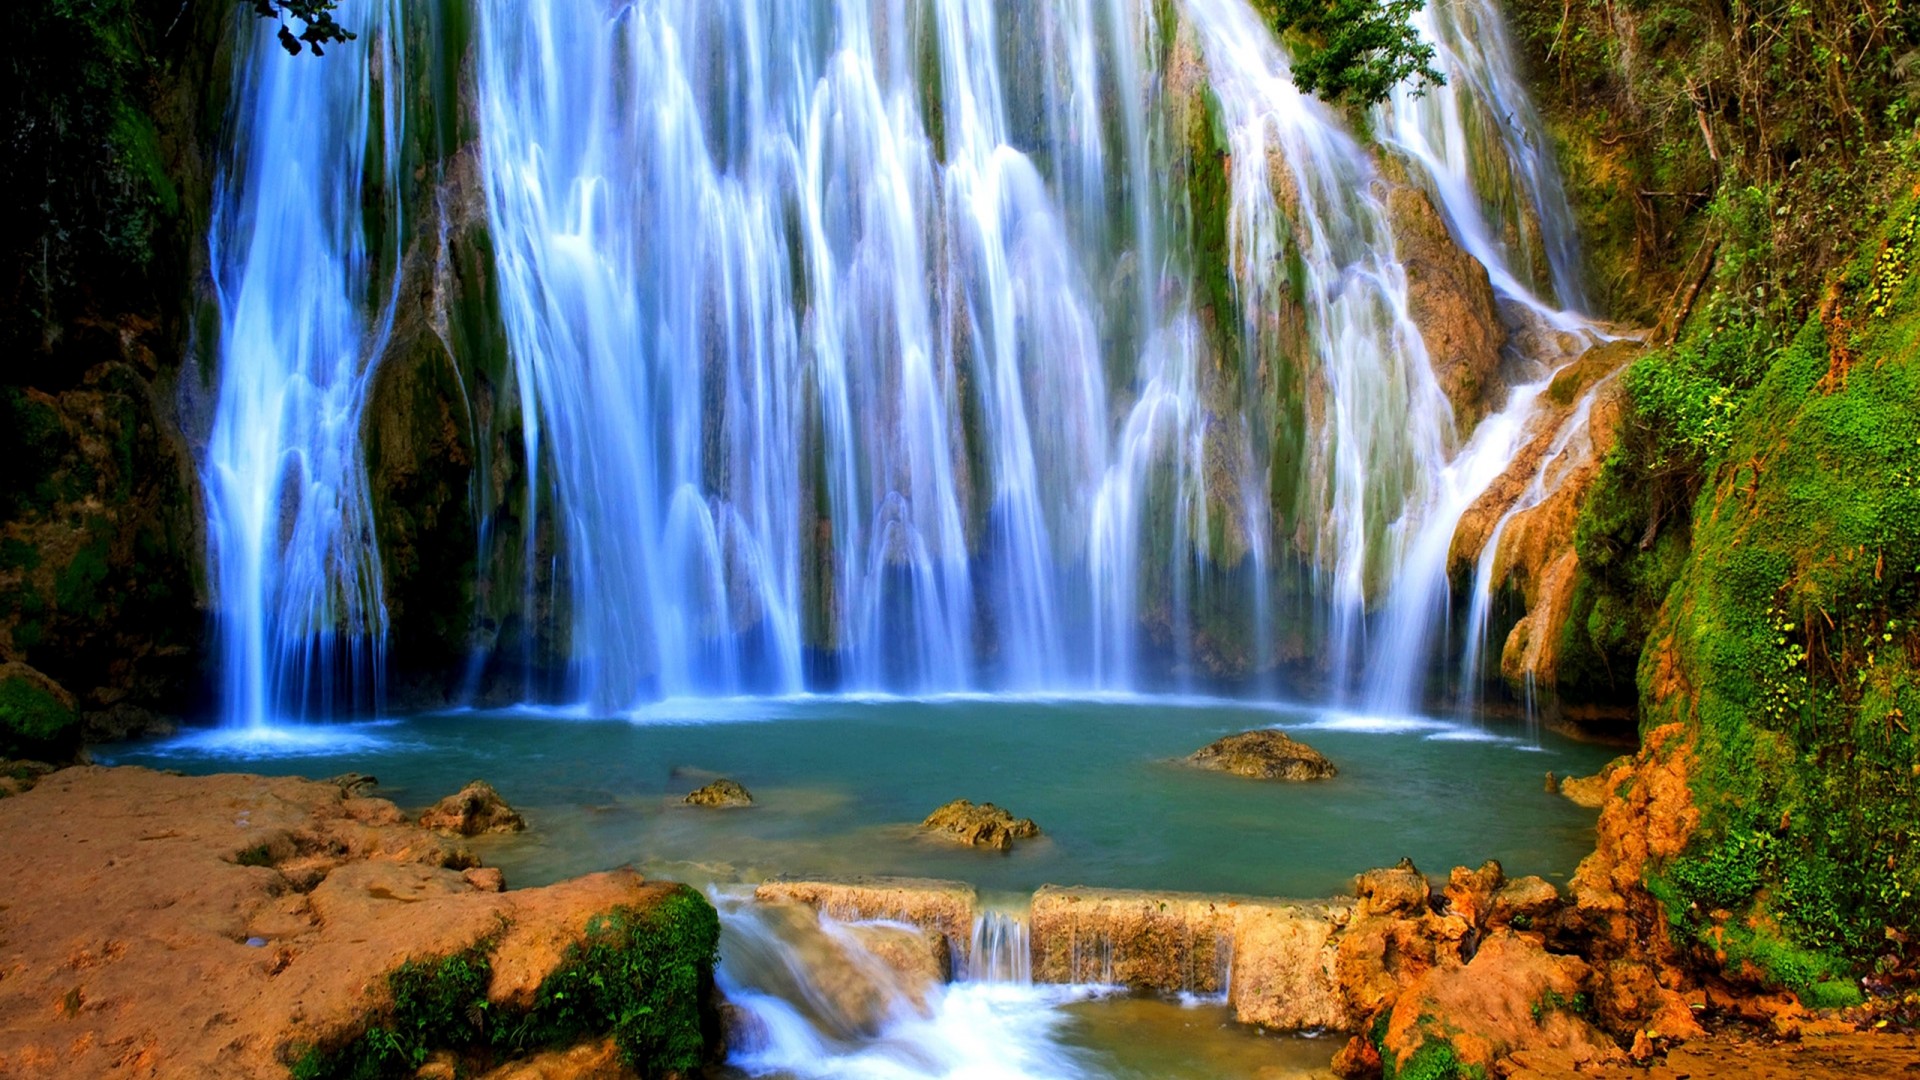 Beautiful Hd Wallpaper Waterfall Rocks Forest 247018